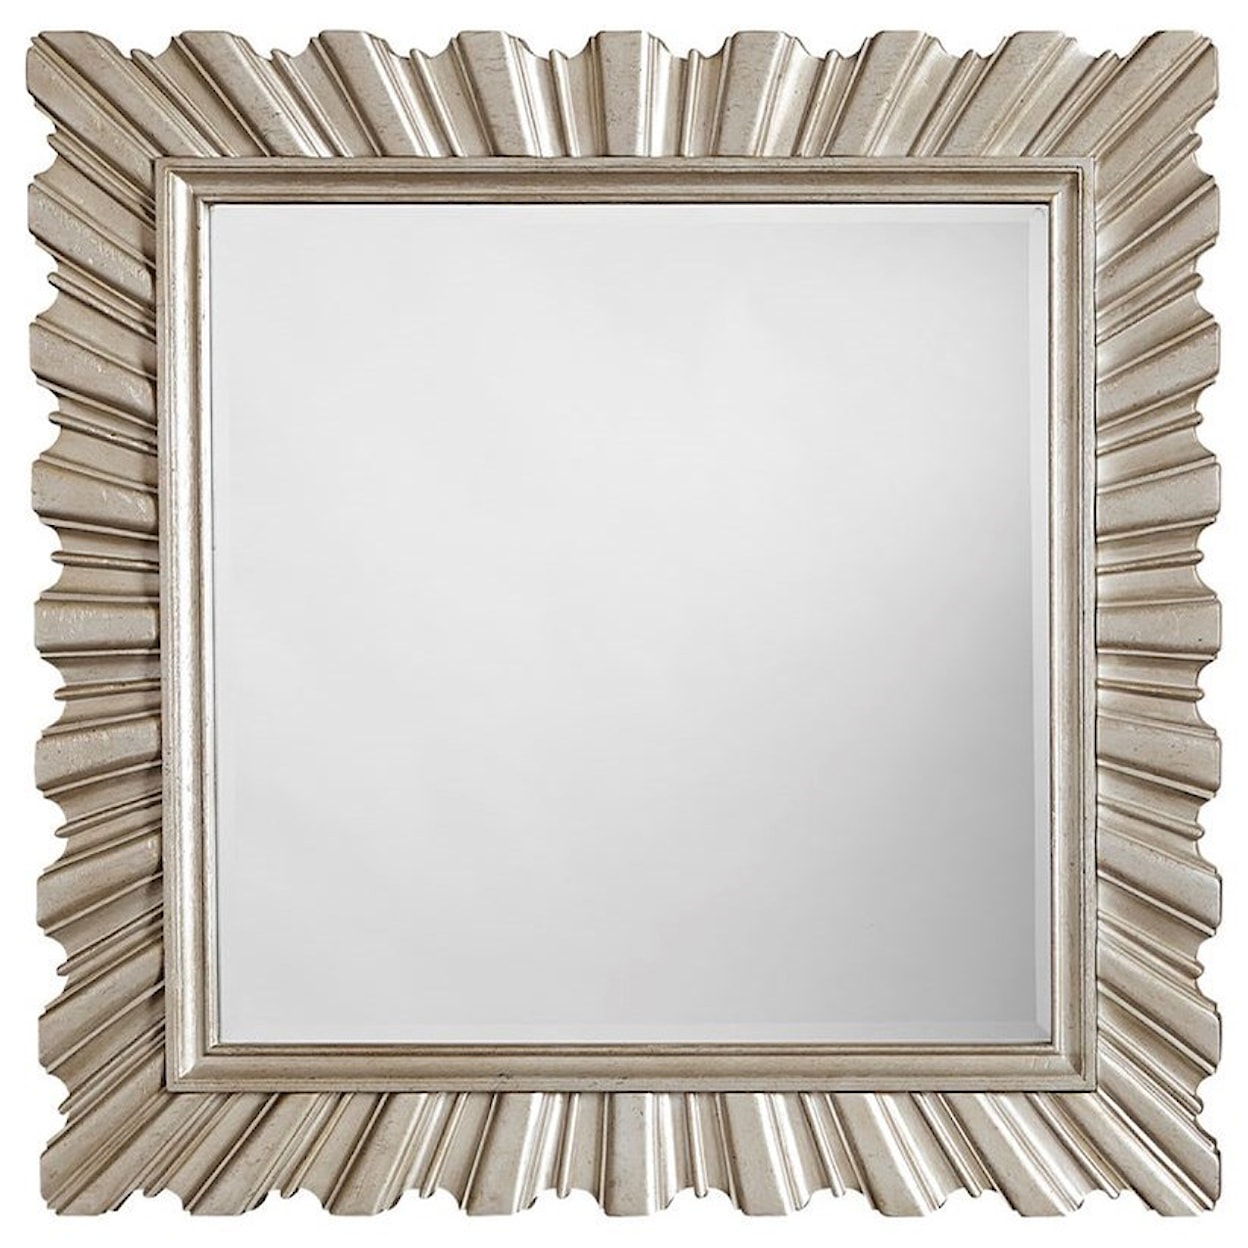 A.R.T. Furniture Inc Starlite Accent Mirror